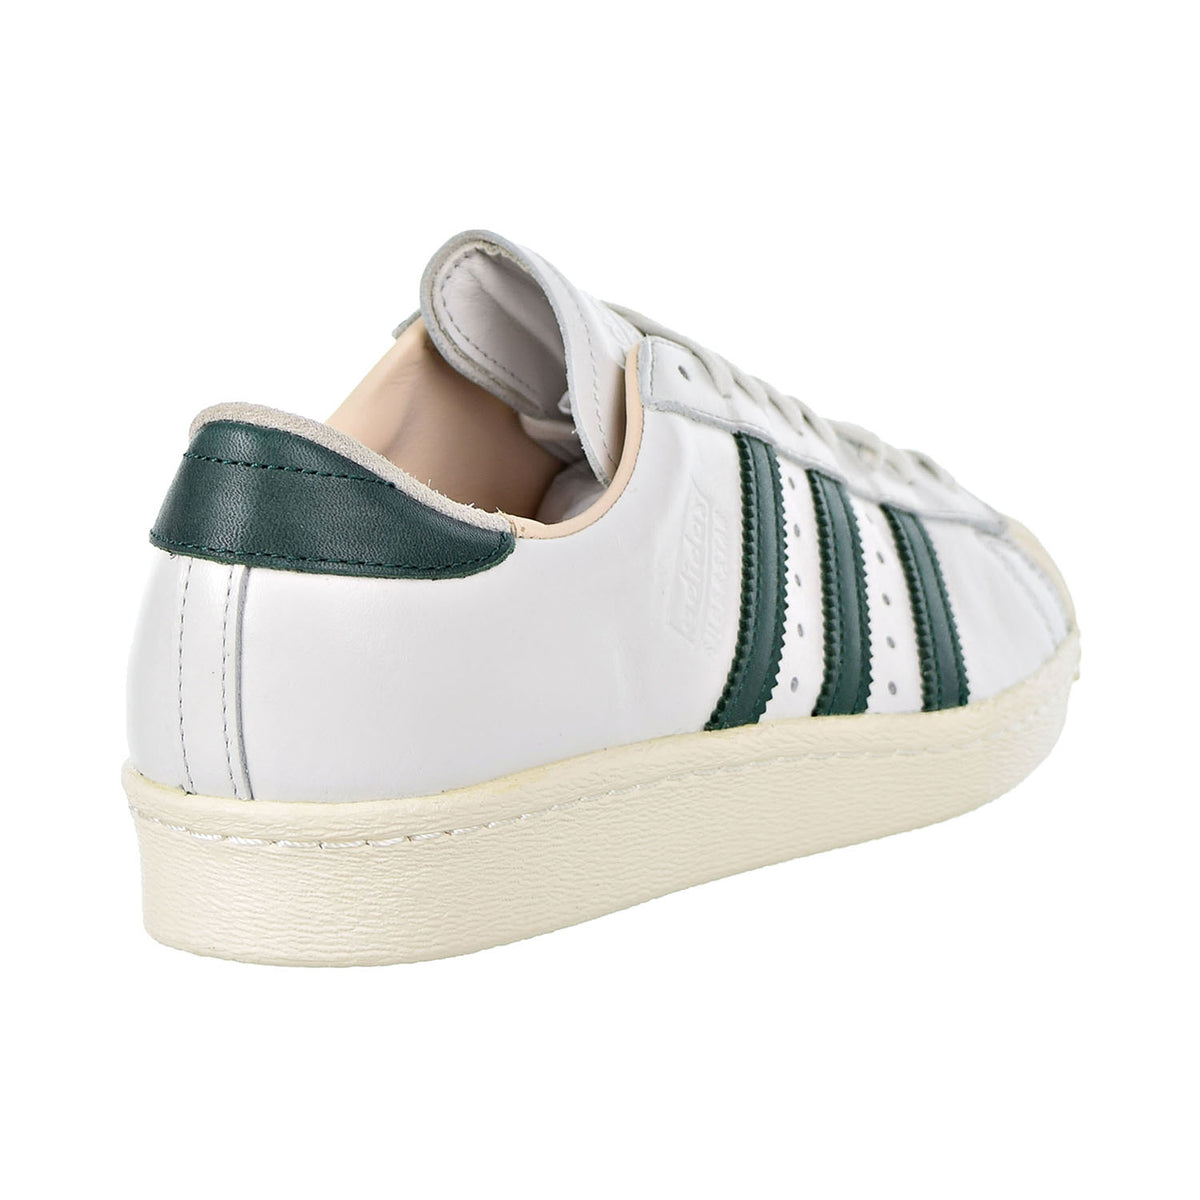 Superstar 80s Delux Shoes - Vintage White/Green